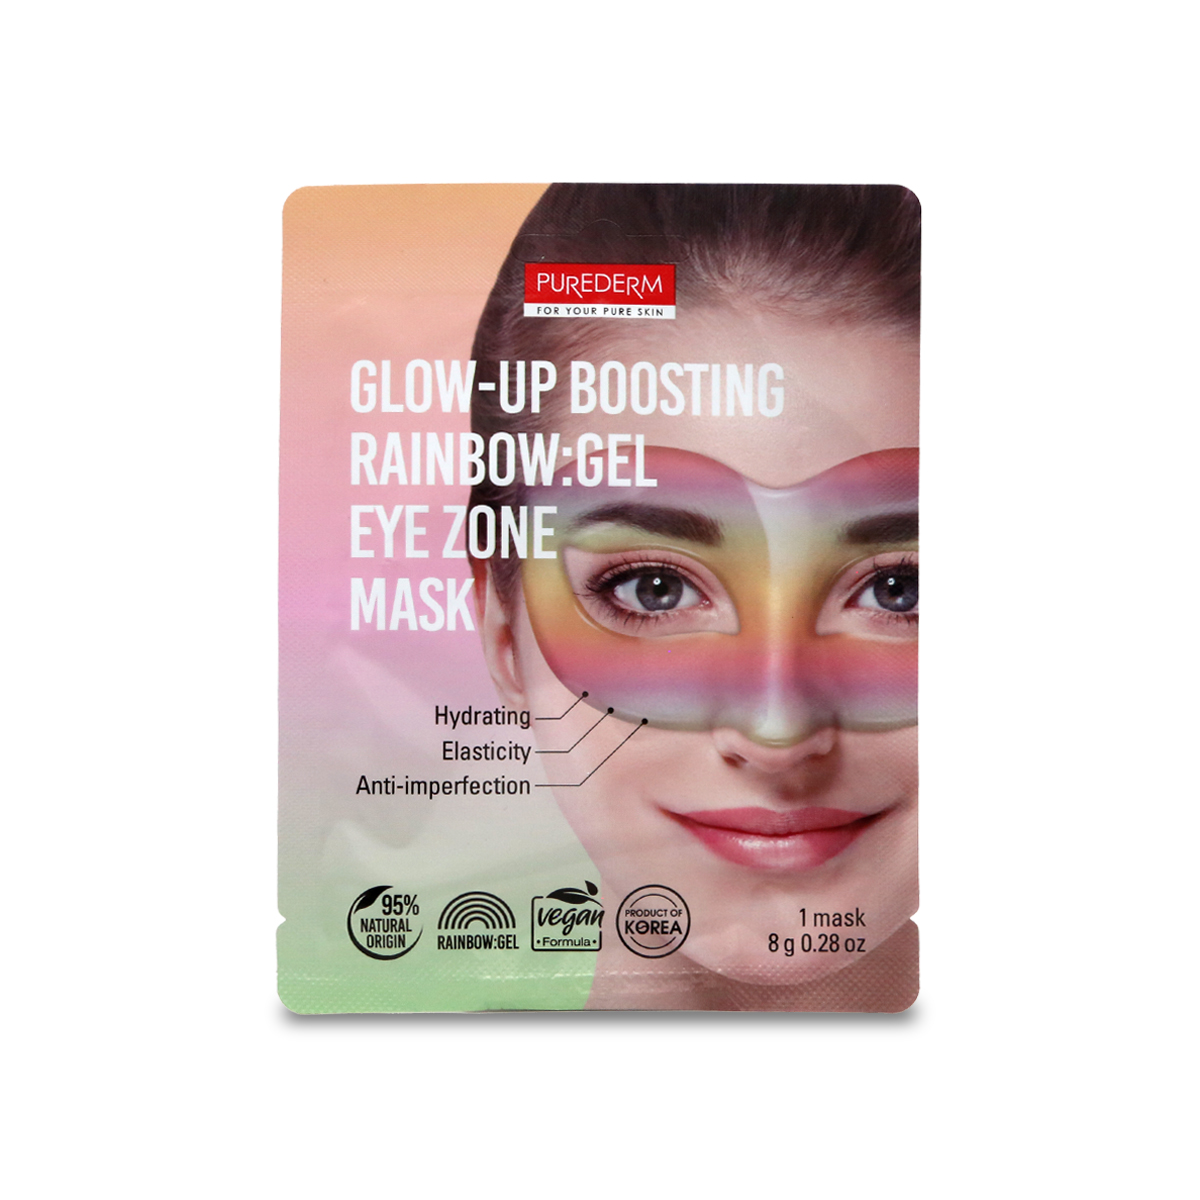 147-8809738320594-ADS-767-Purederm Glow-Up Boosting Rainbow Gel Eye Zone Mask